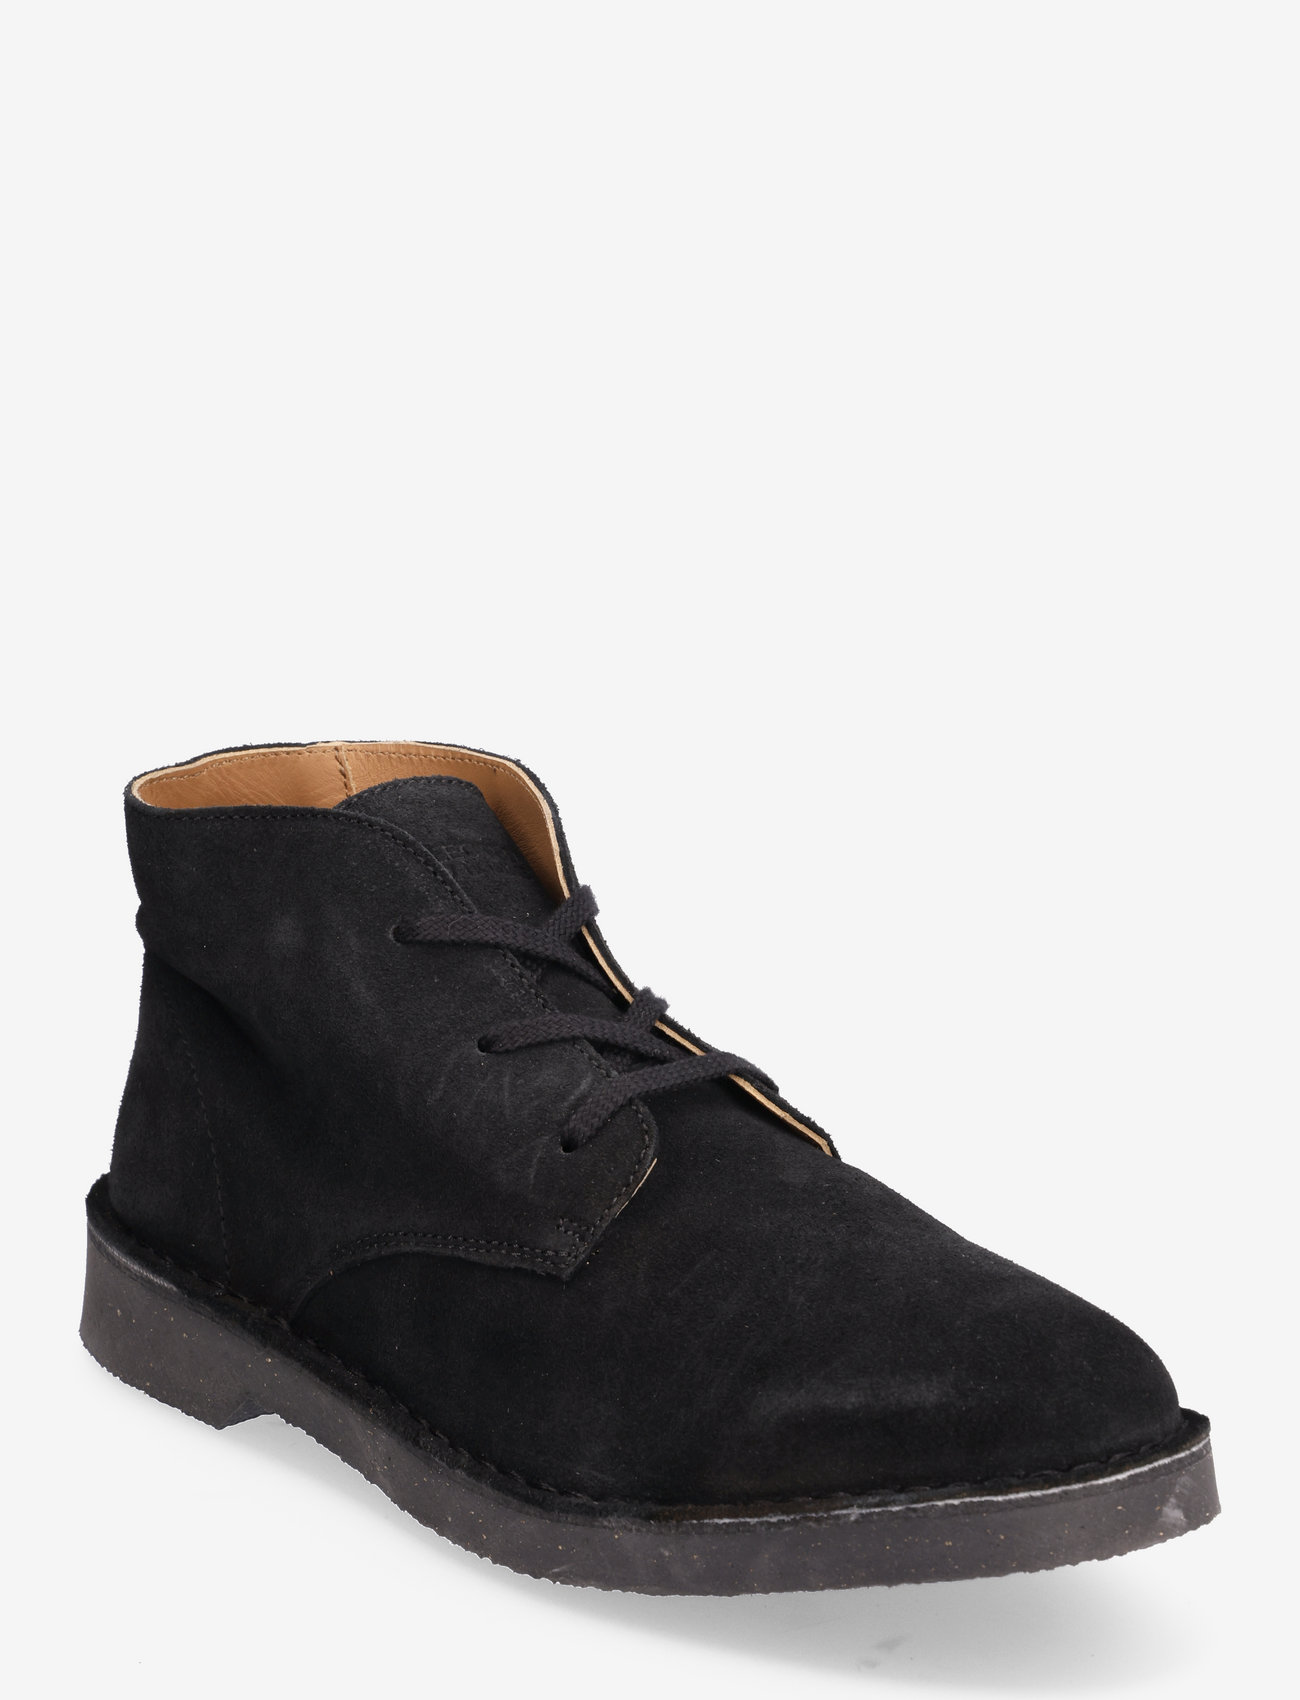 Selected Homme - SLHRIGA NEW SUEDE CHUKKA BOOT B - veter schoenen - black - 0